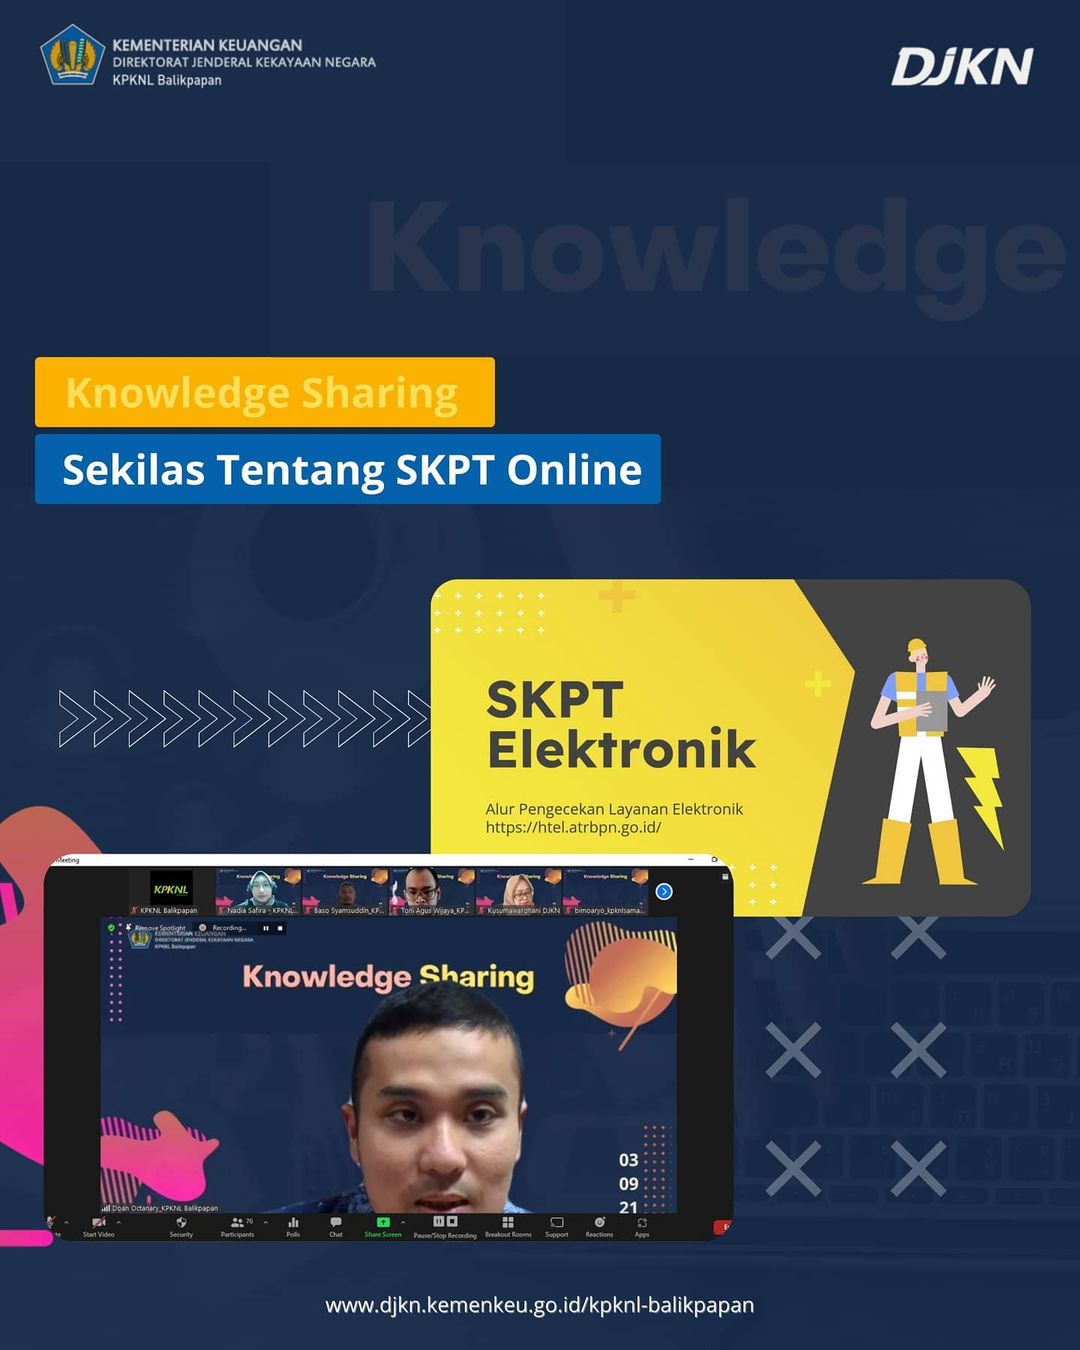 Berbagi Pengetahuan Melalui Knowledge Sharing, KPKNL Balikpapan Bahas SKPT Online